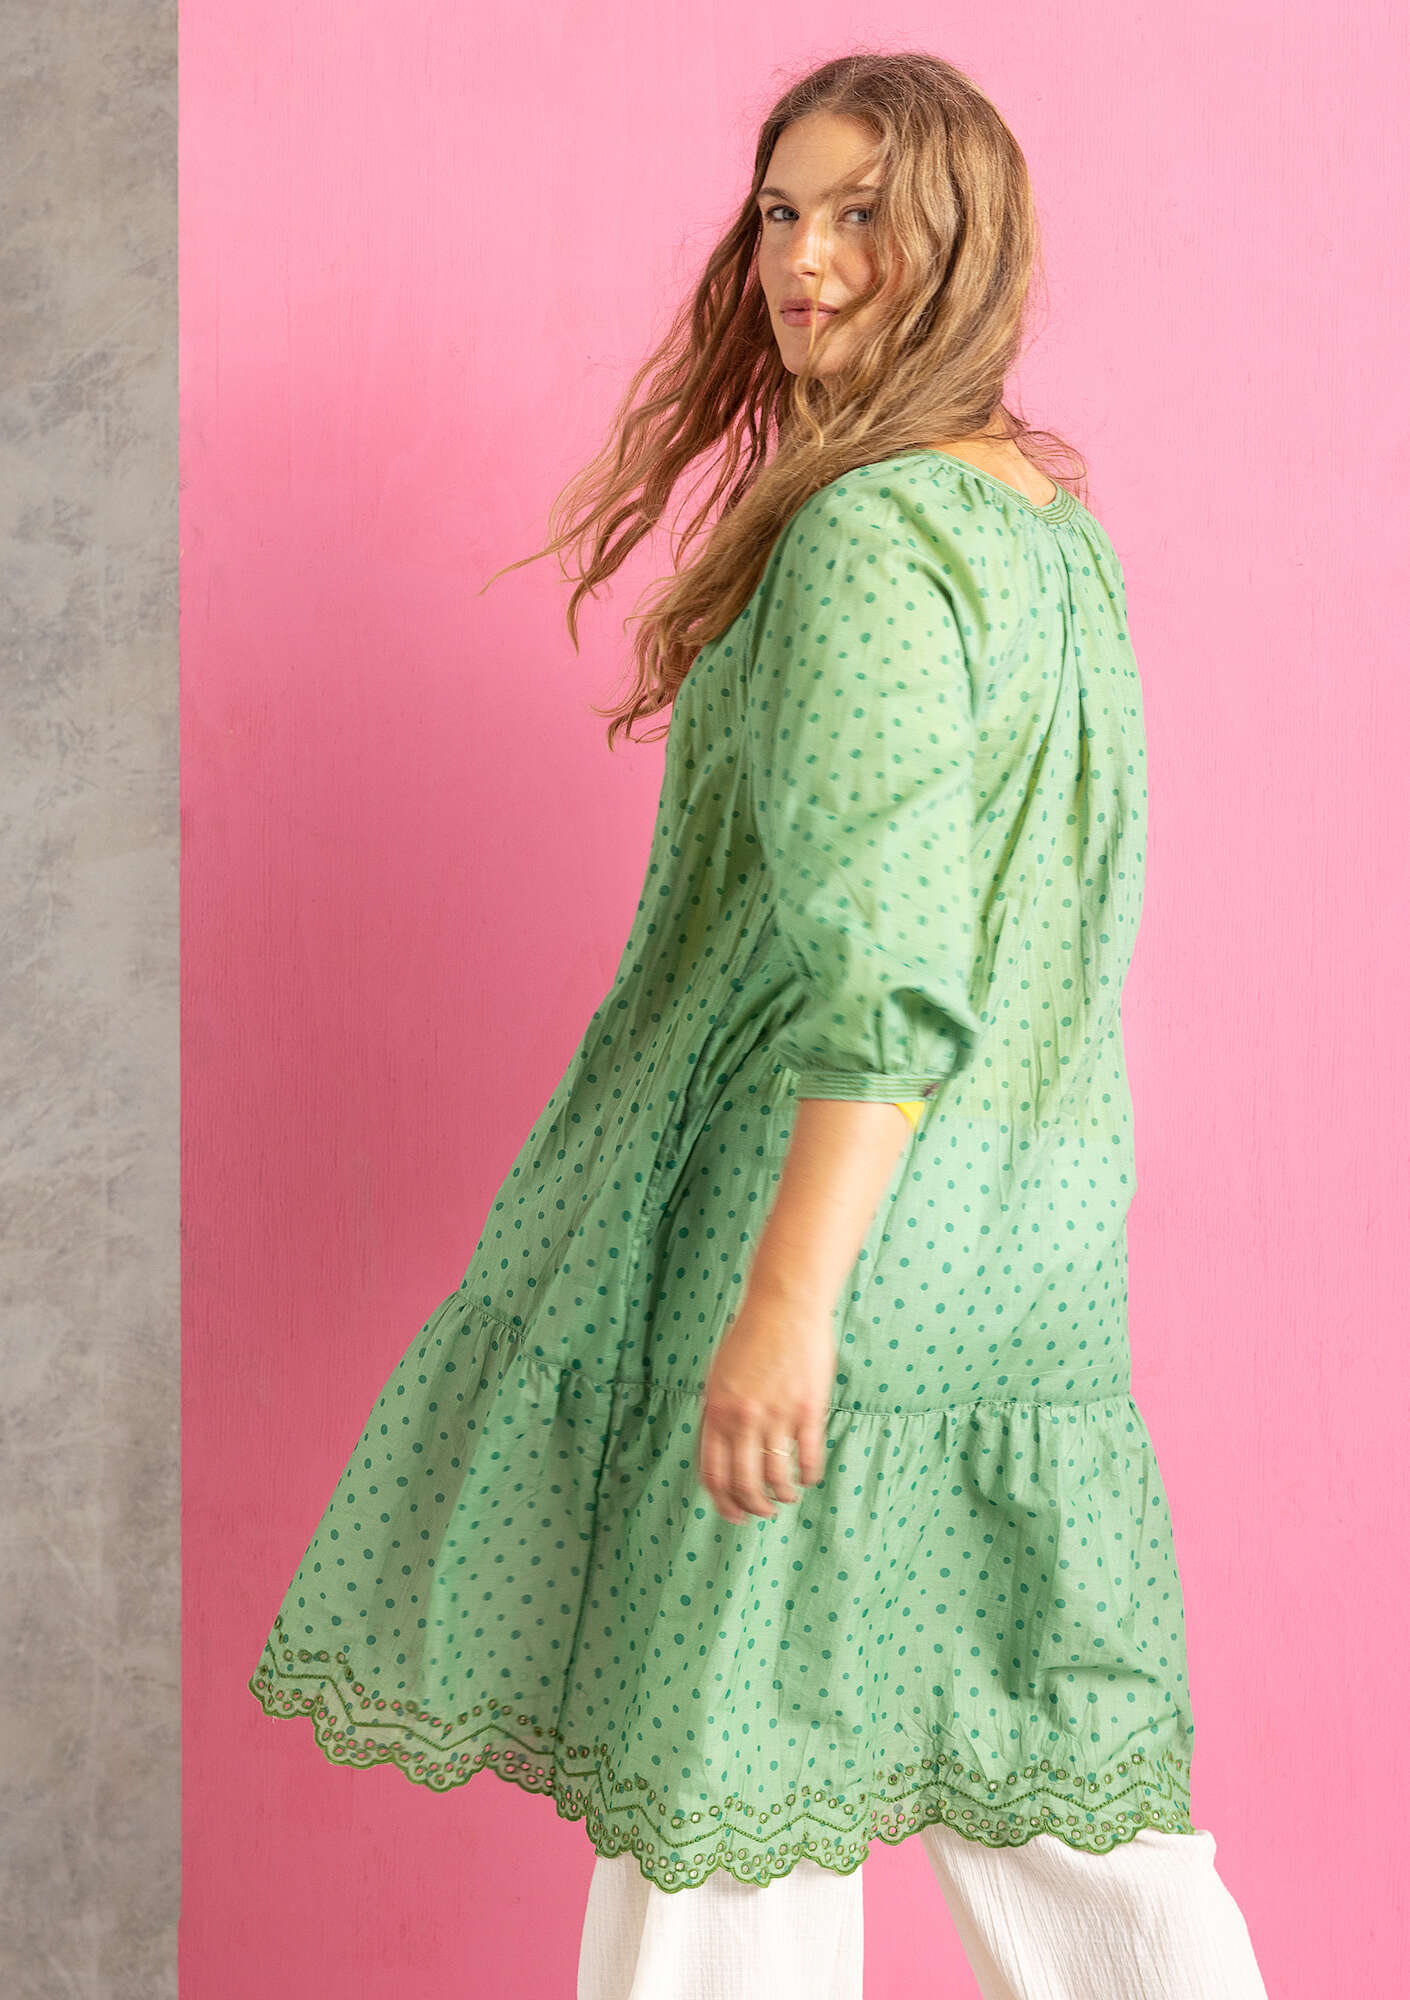 Robe tissée  Lilly  en coton biologique vert terne